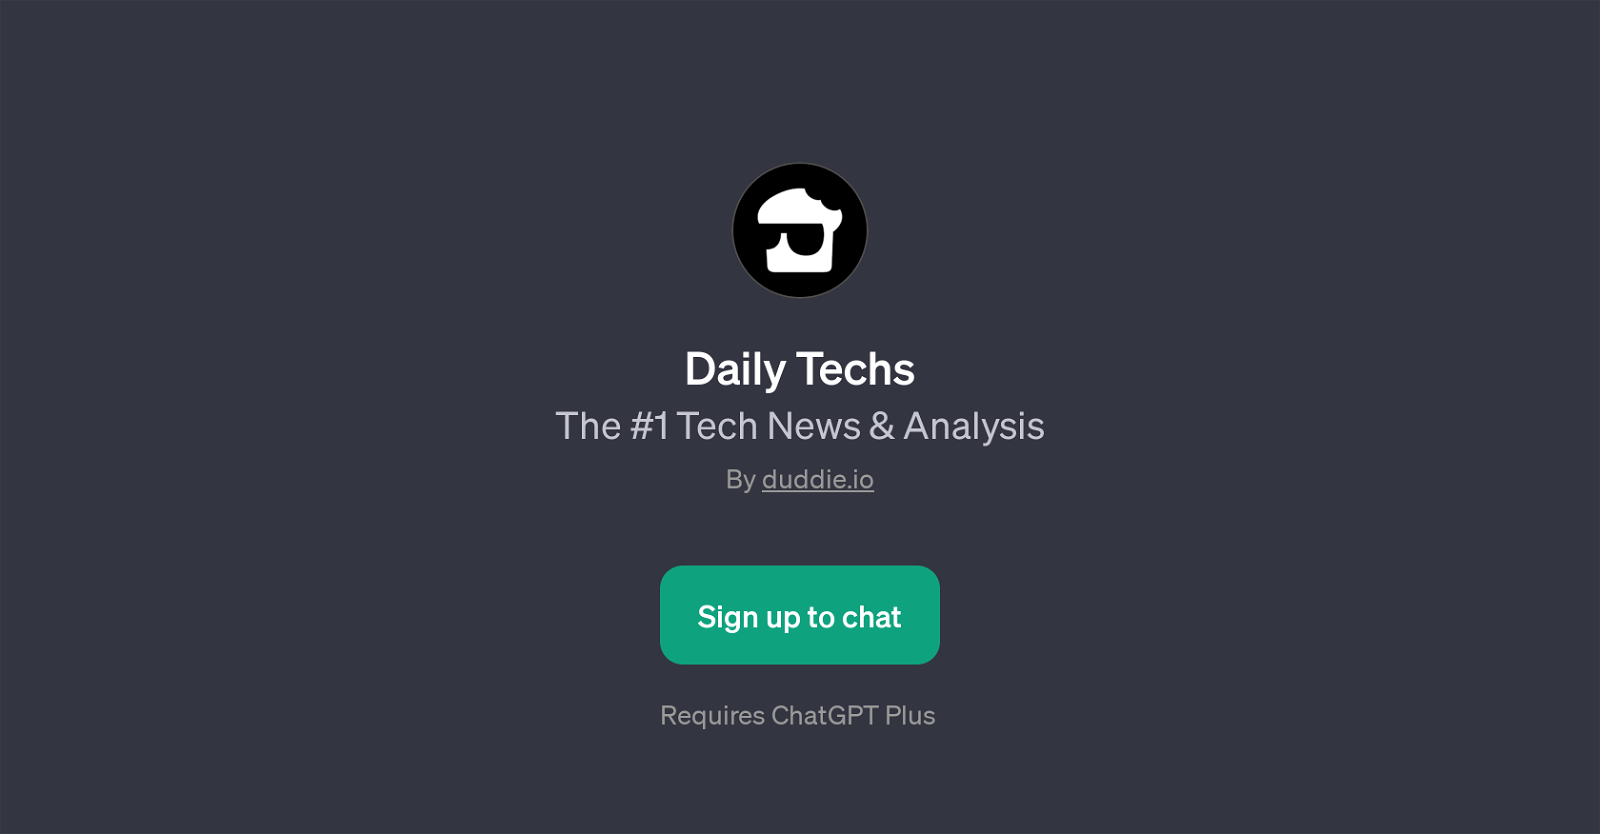 Daily Techs website